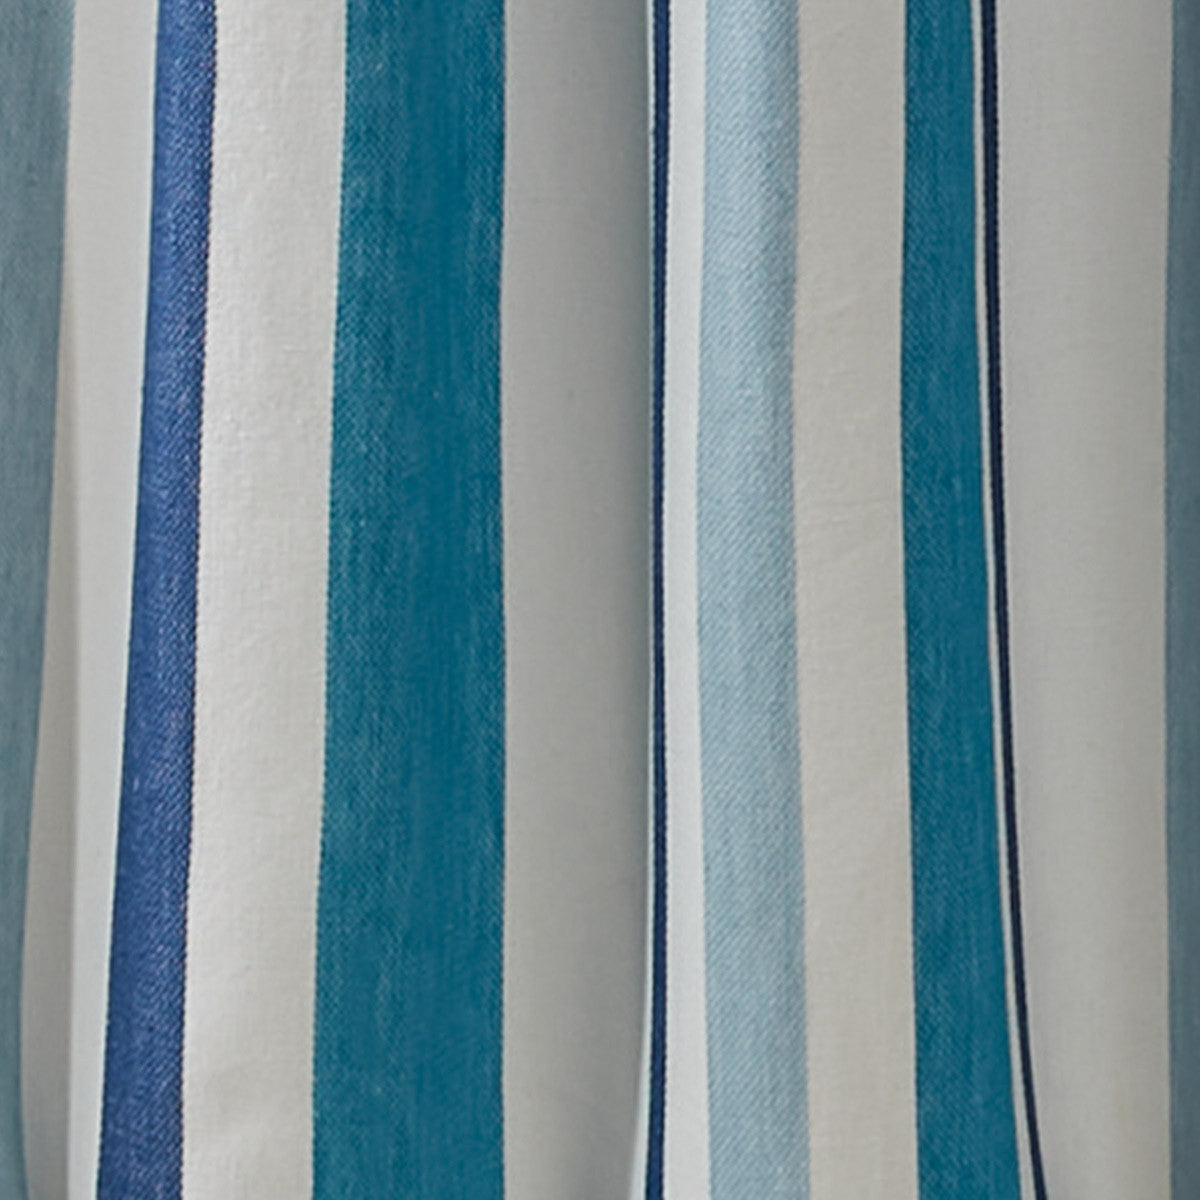 Colby Stripe Shower Curtain 72" x 72" - Park Designs